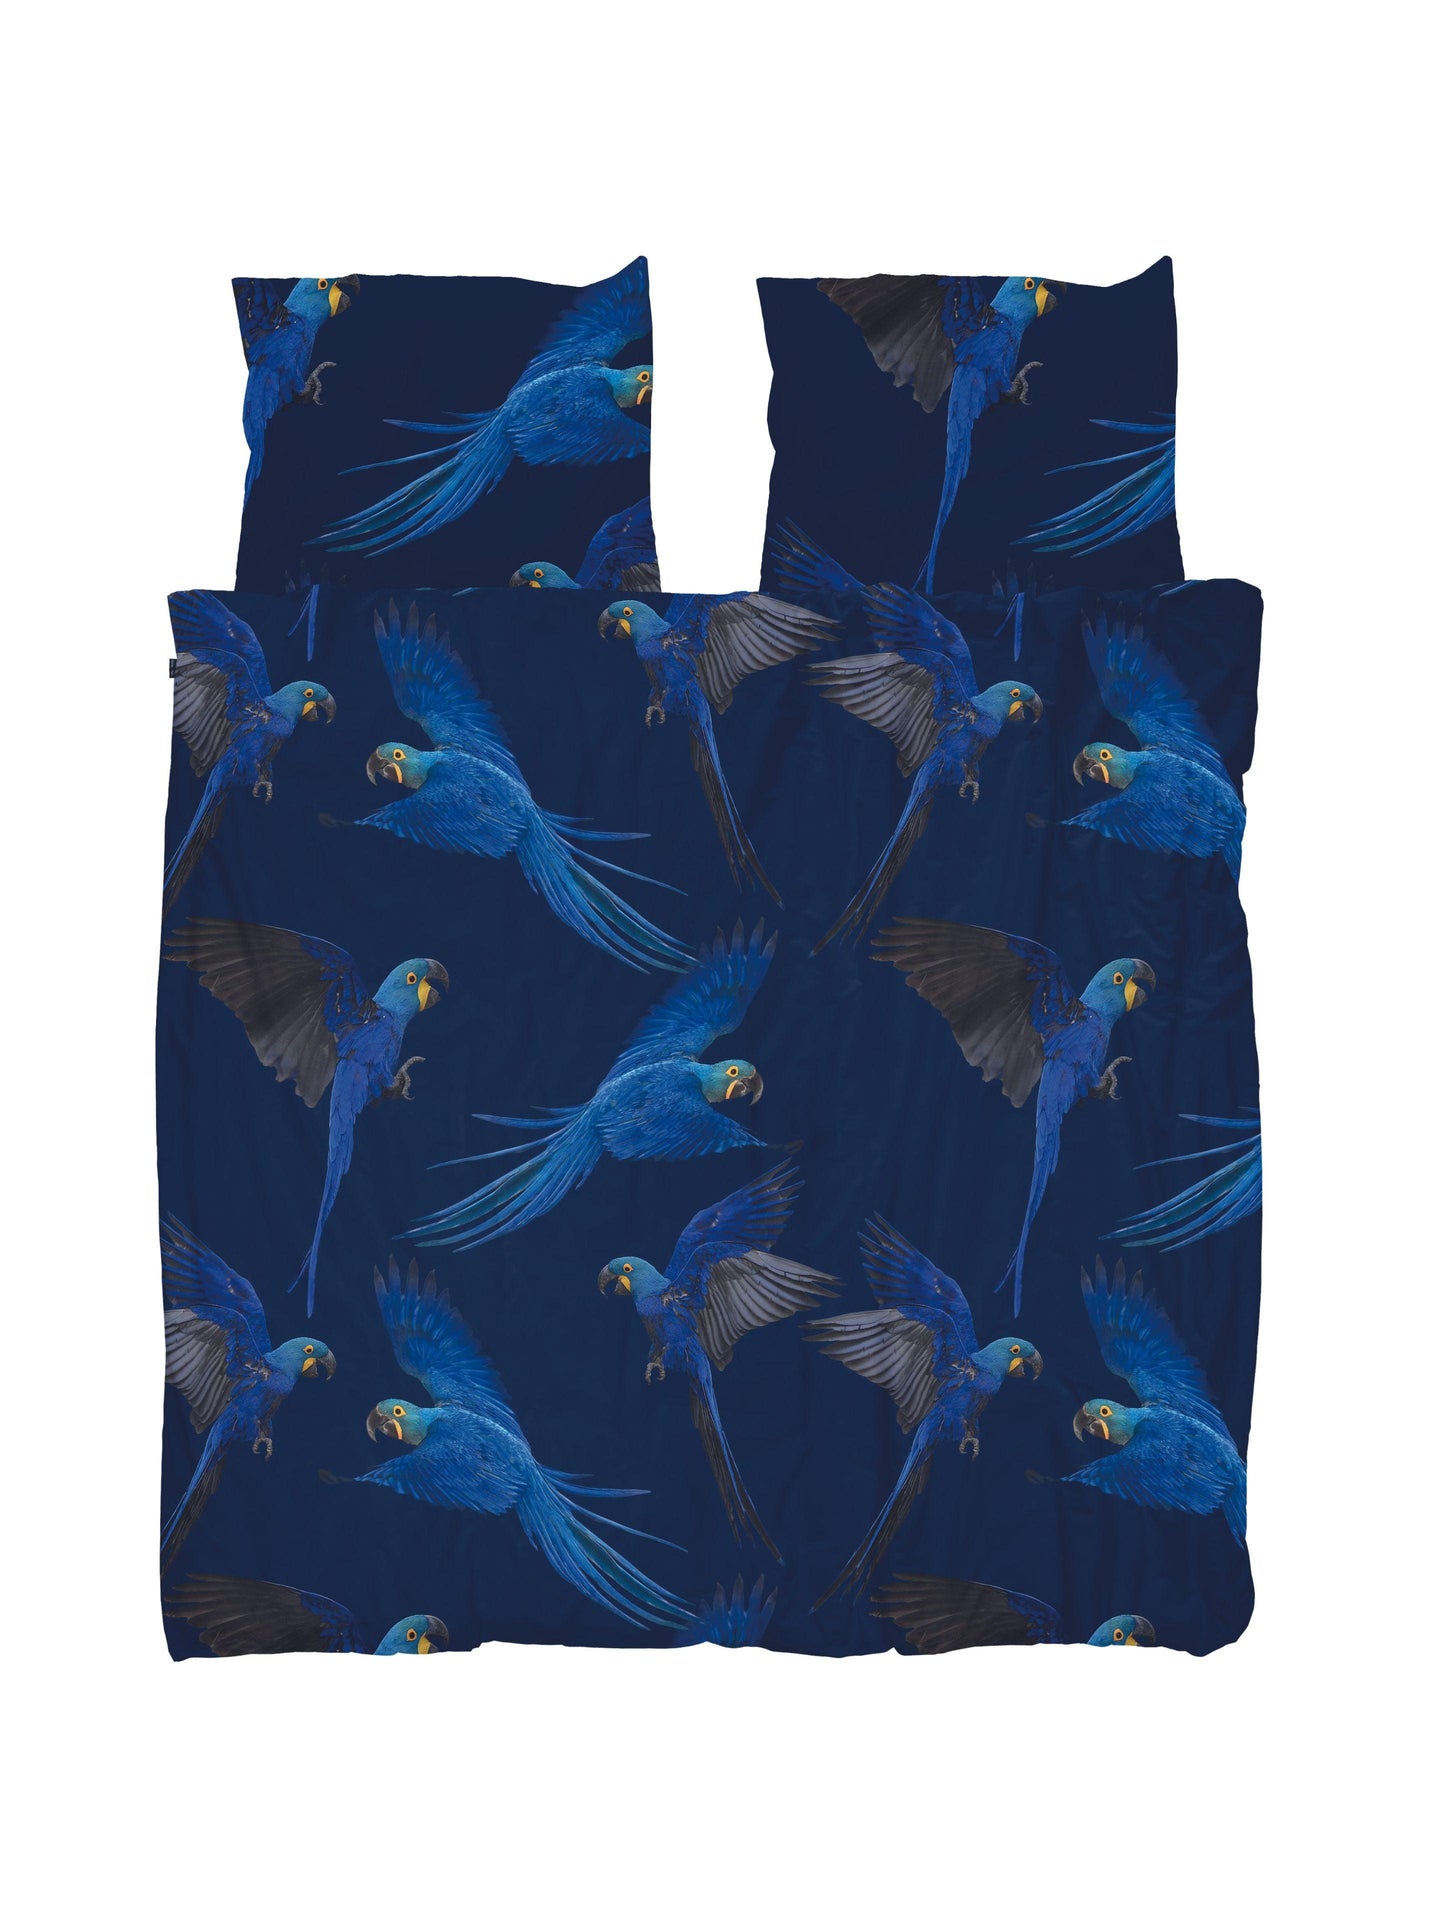 Blue Parrot dekbedovertrek - SNURK